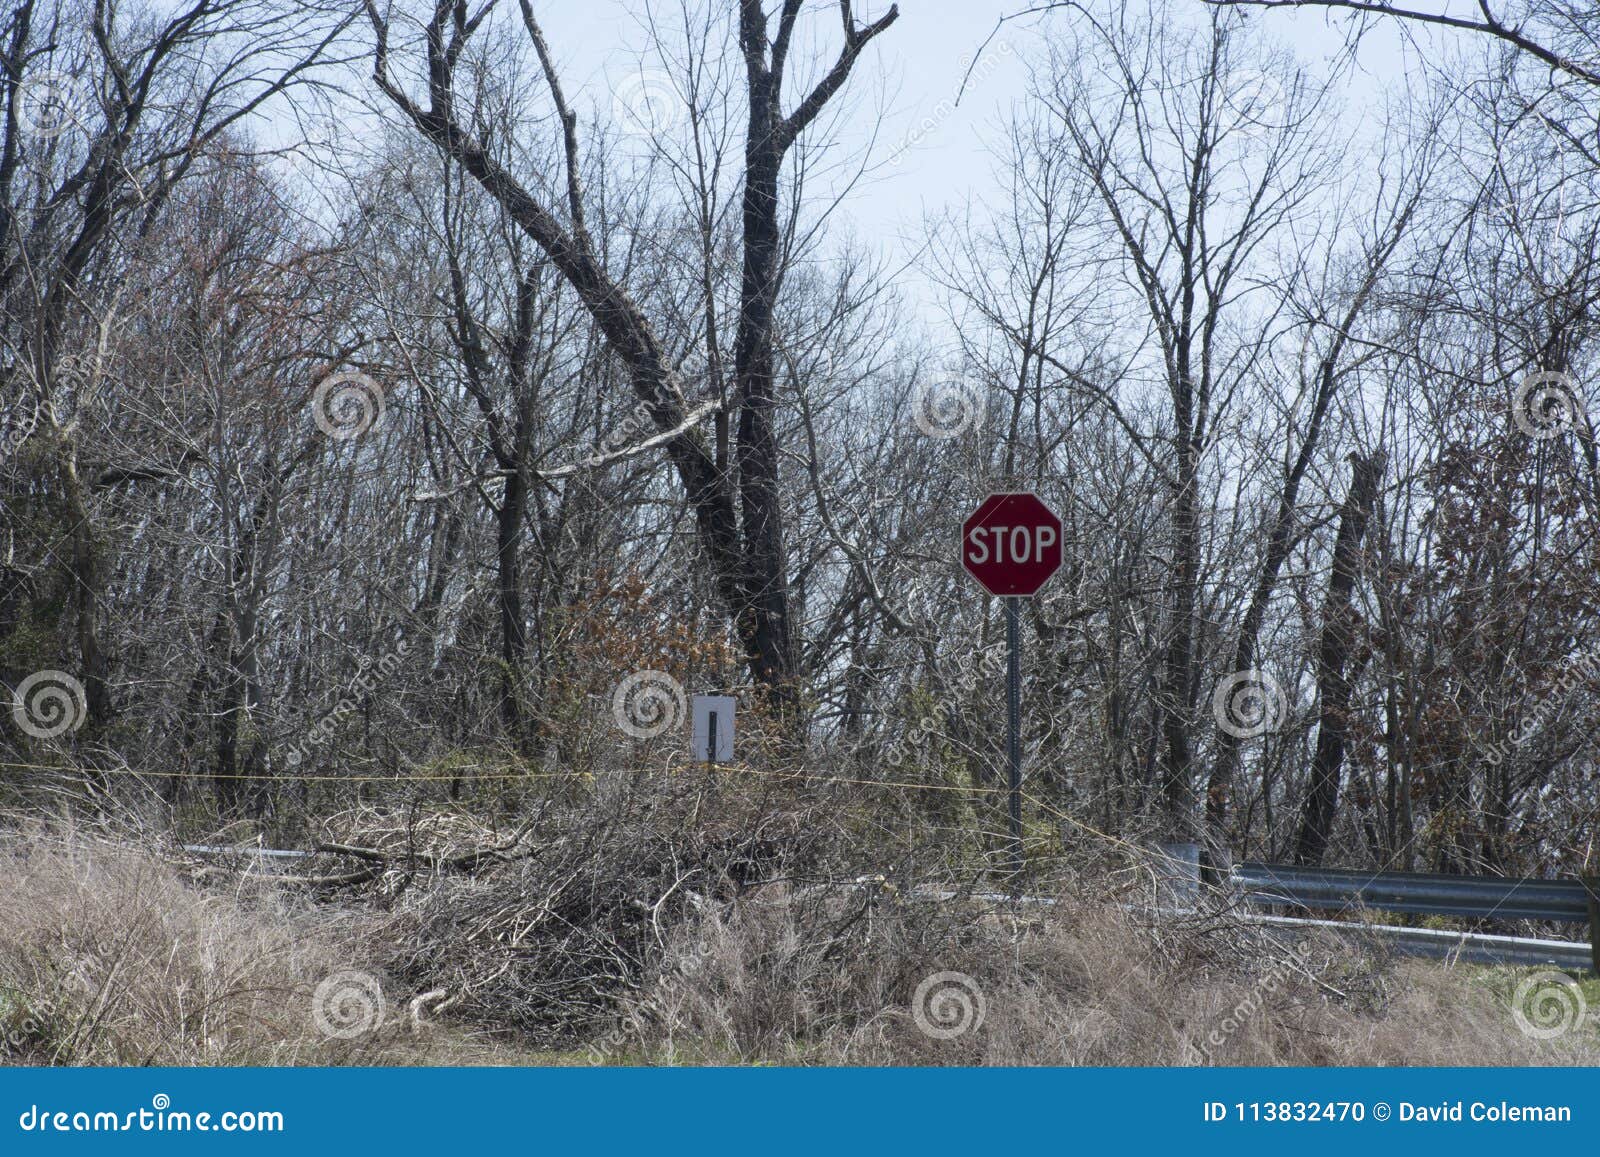 forgotten roadway stop sign